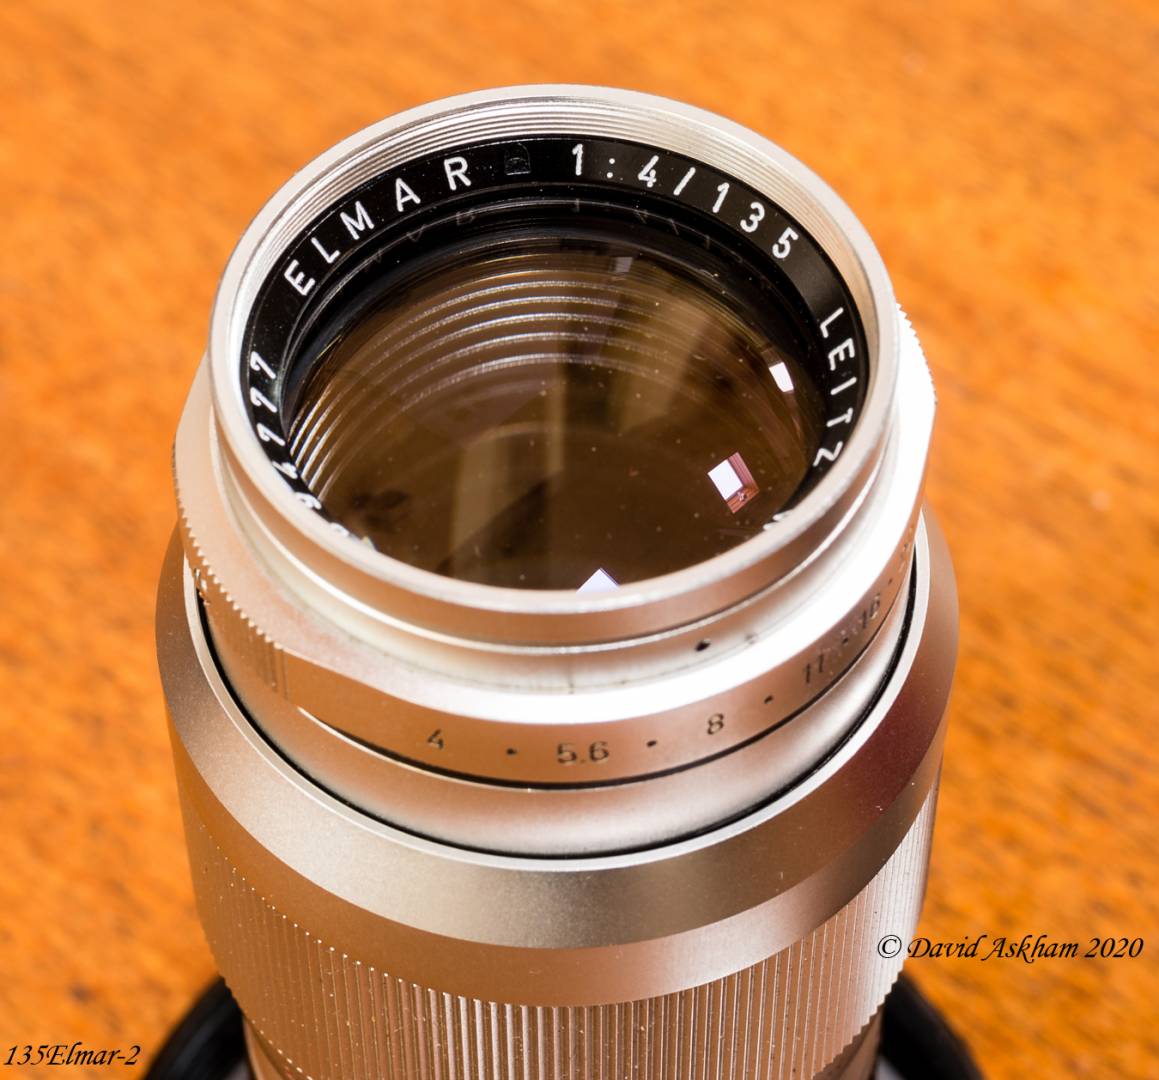 Leica 135mm f/4 Elmar: Bargain telephoto for the M - Macfilos